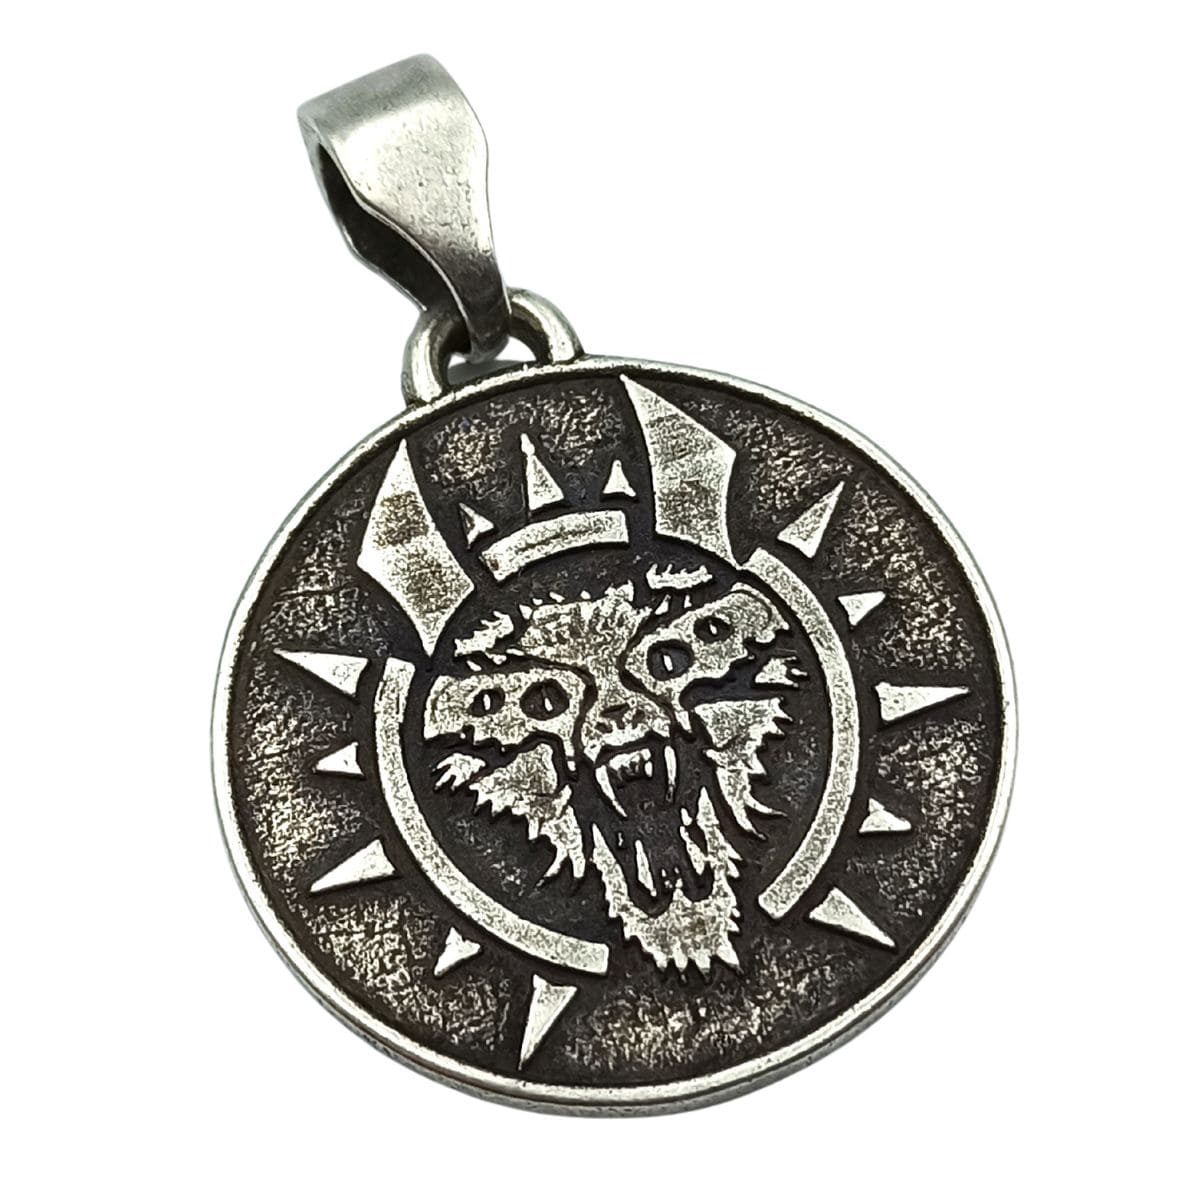 Hel goddess silver plated pendant   